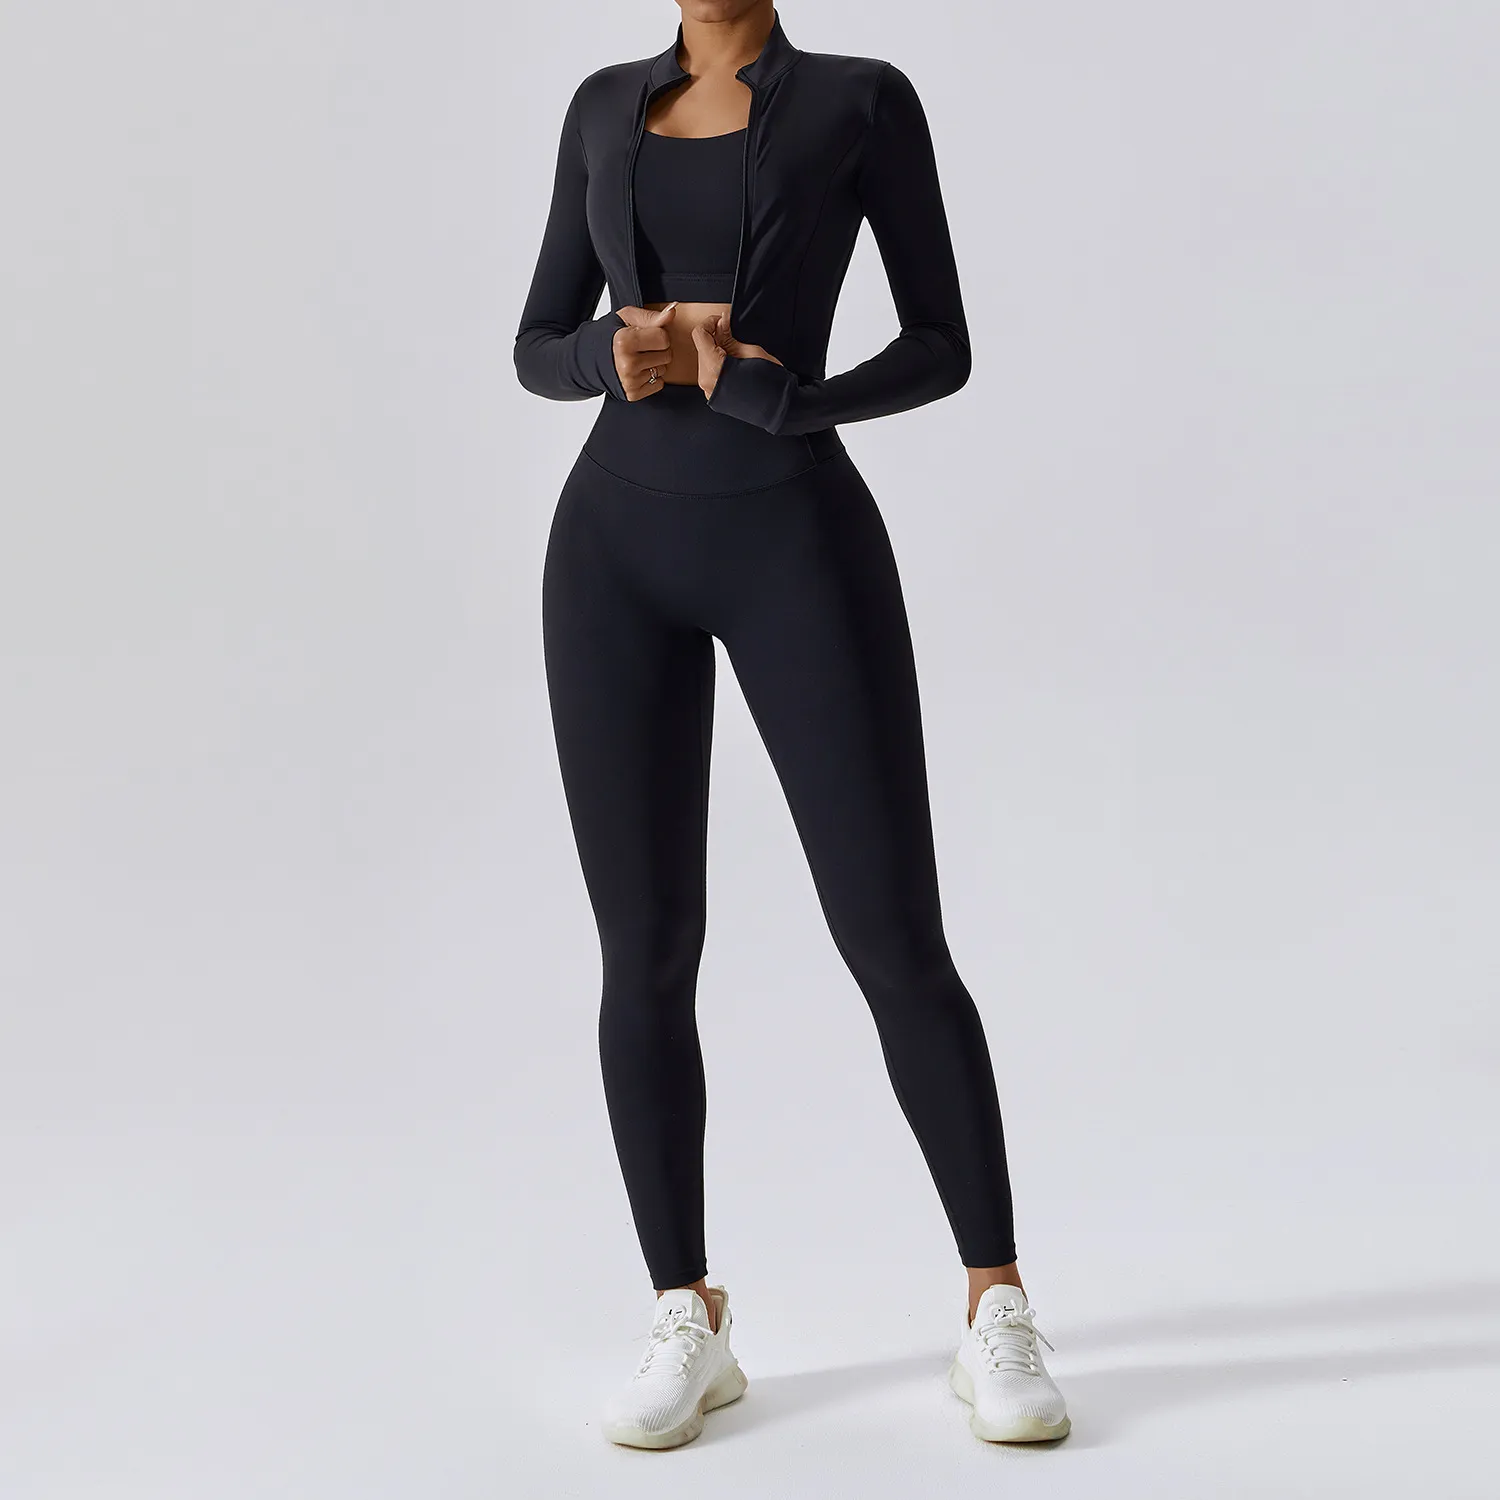 Women's Yoga Pants Fitness Sportwear Training Running Workout